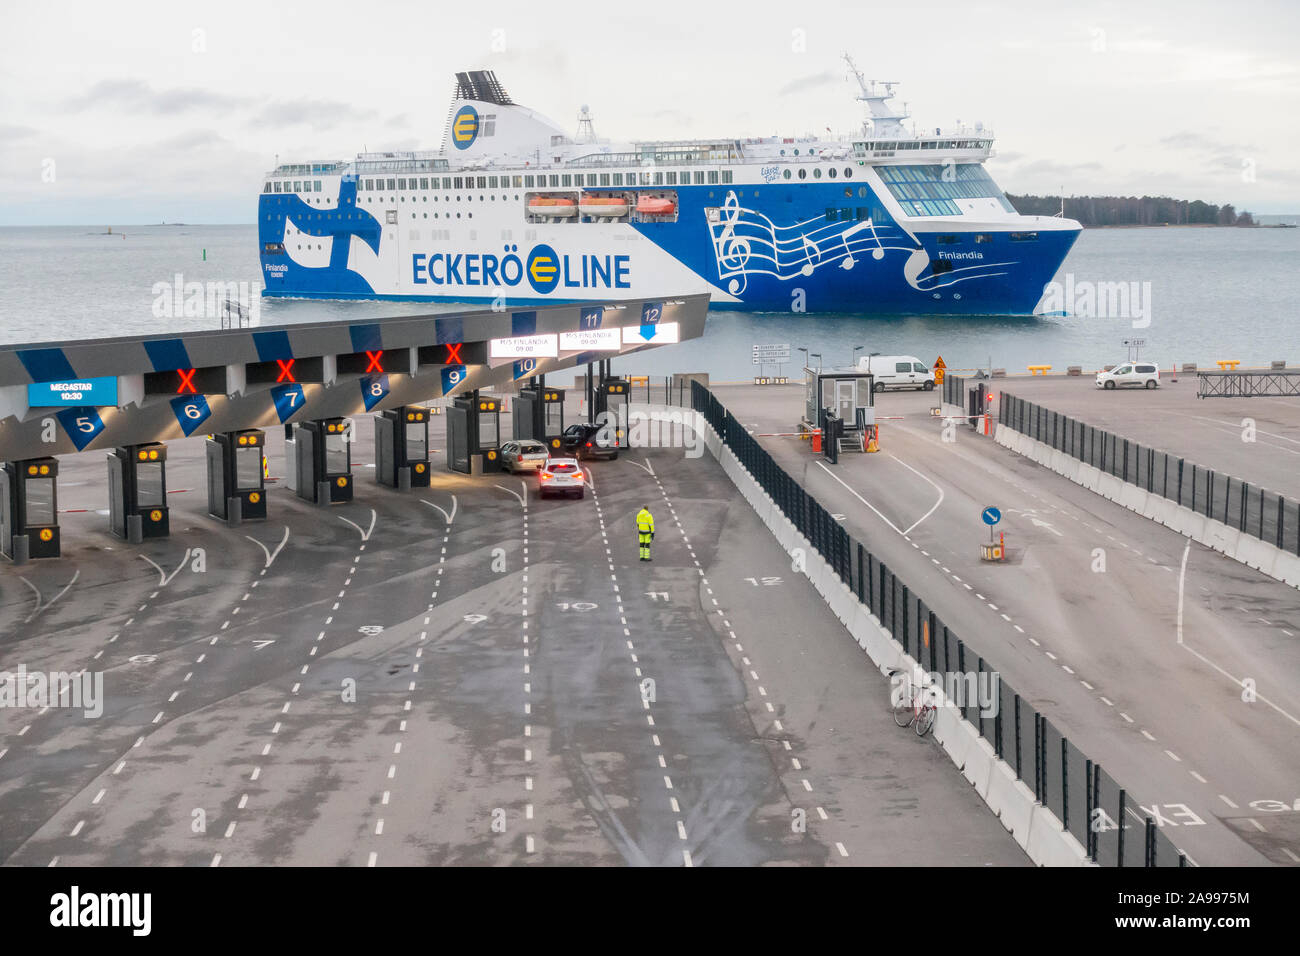 Eckerö line ferry from Tallinn approaching West terminal passenger terminal  in Helsinki Finland Stock Photo - Alamy